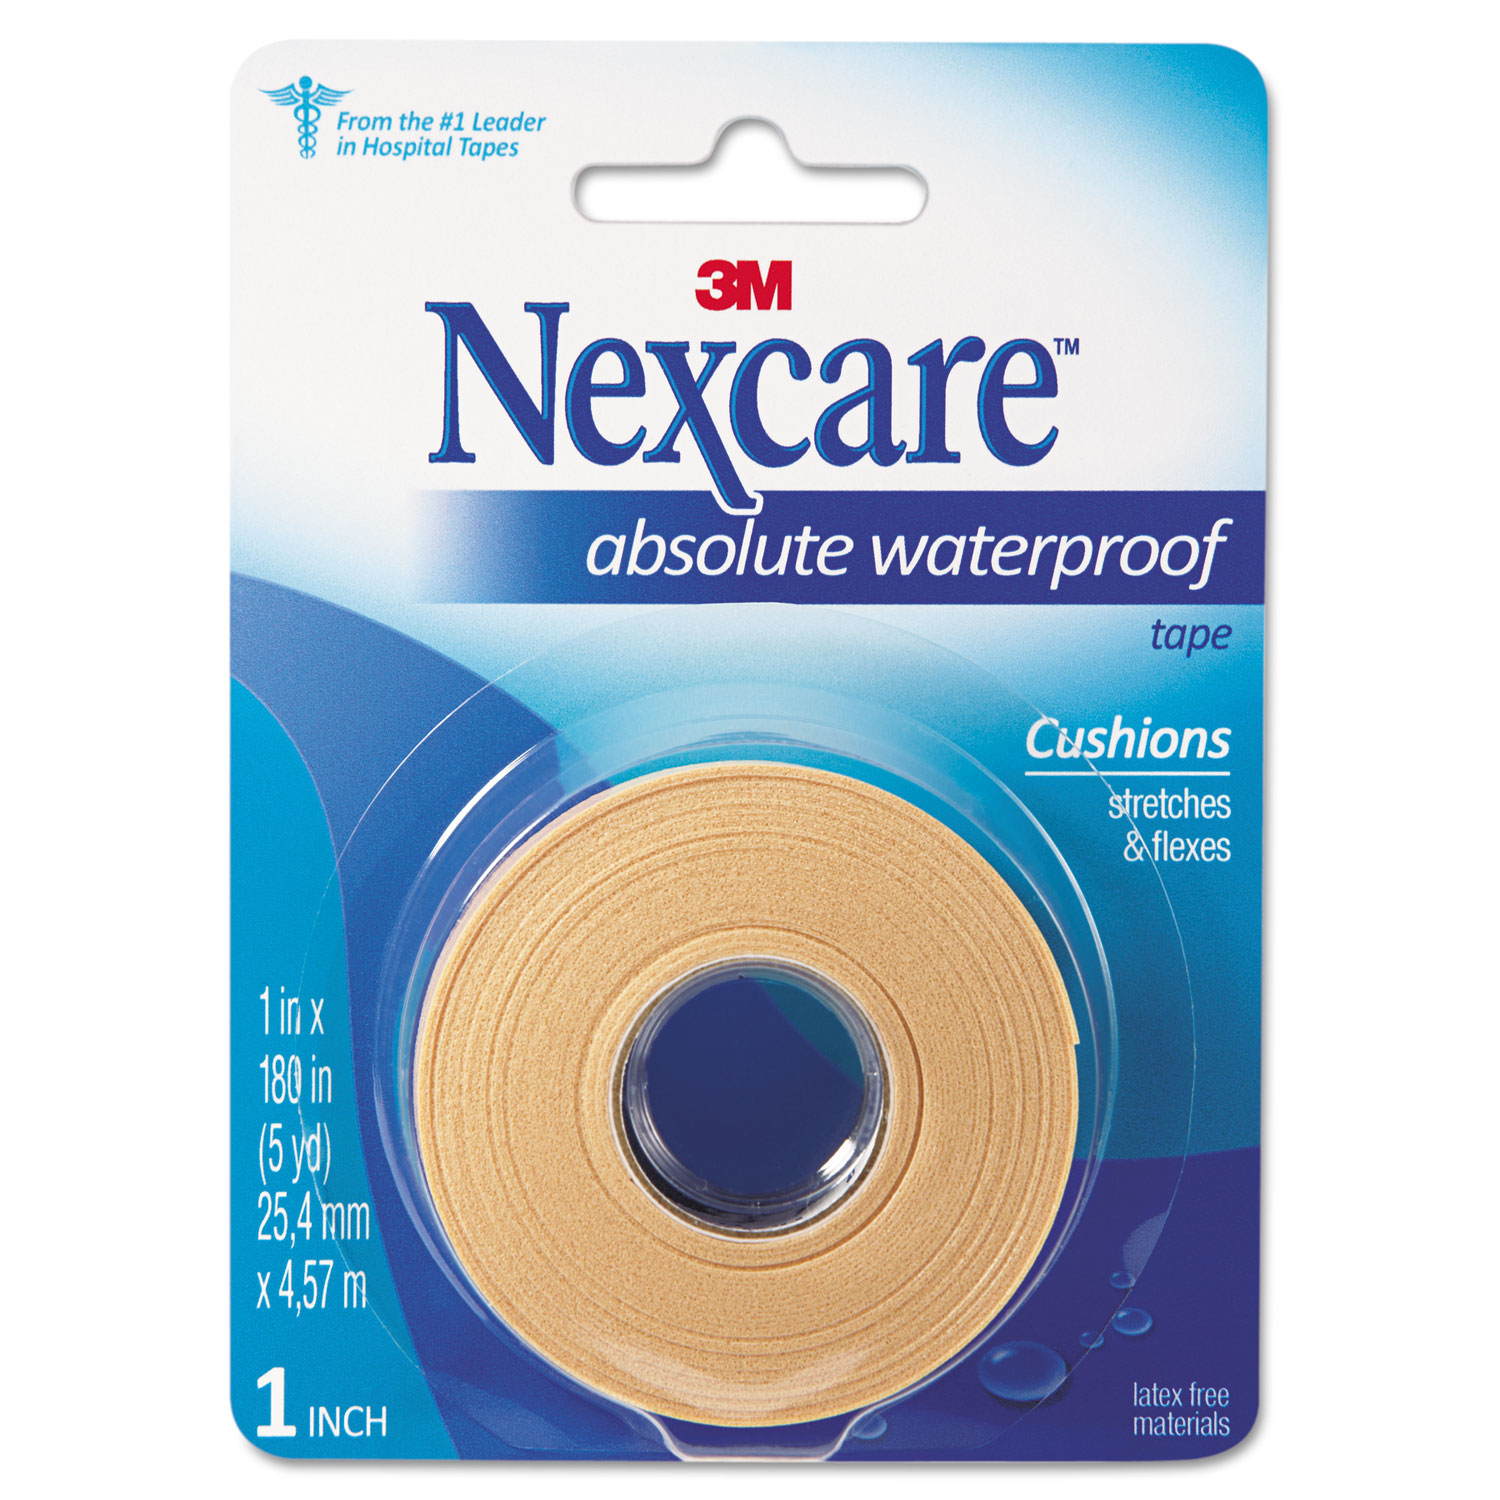  3M Nexcare 731 Absolute Waterproof First Aid Tape, Foam, 1 x 180 (MMM731) 